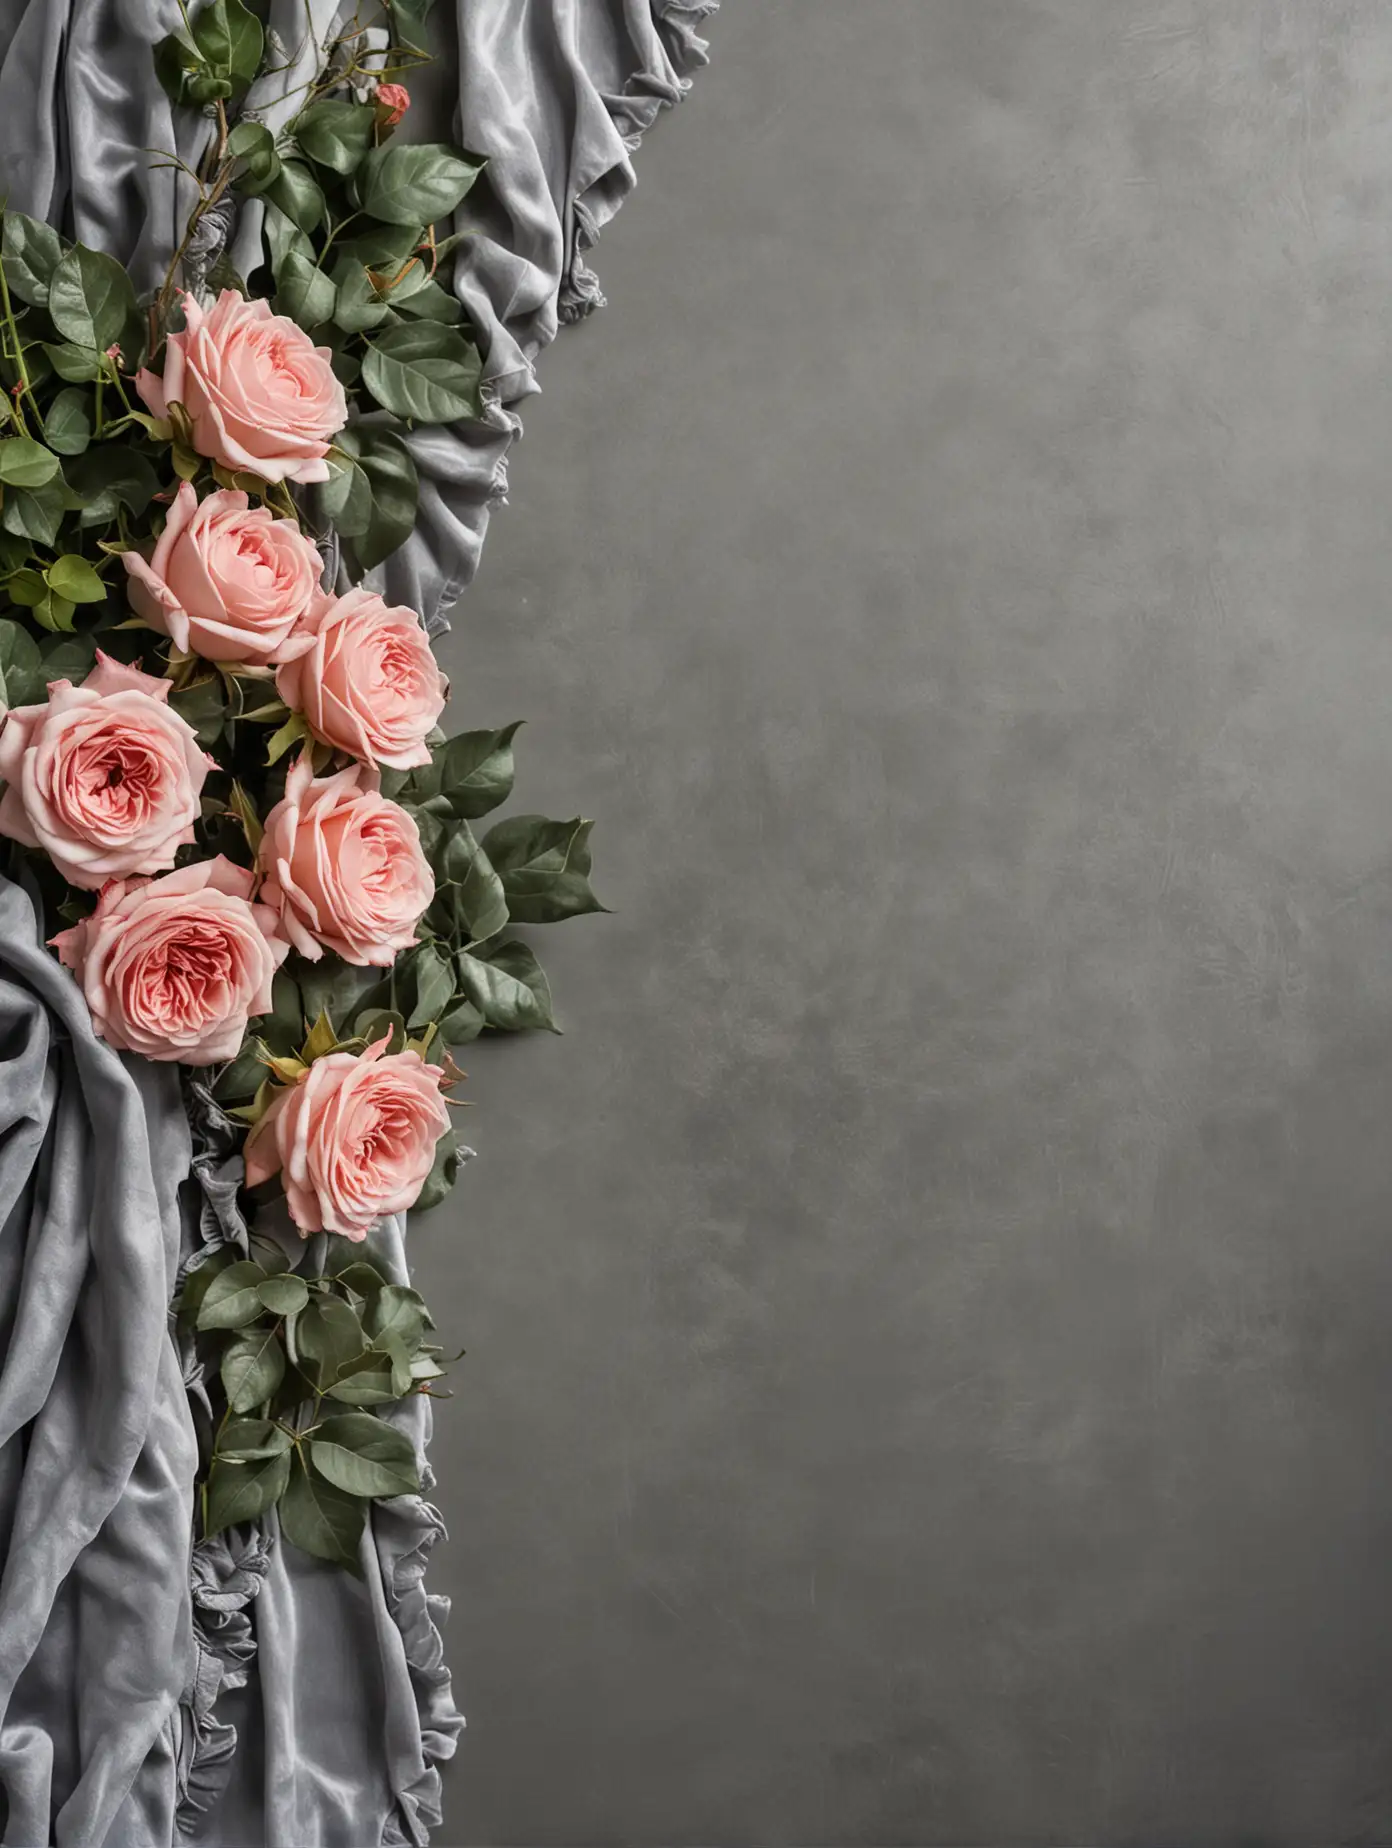 Elegant Roses and Ivy Arrangement on Draped Gray Fabric with Velvet Background